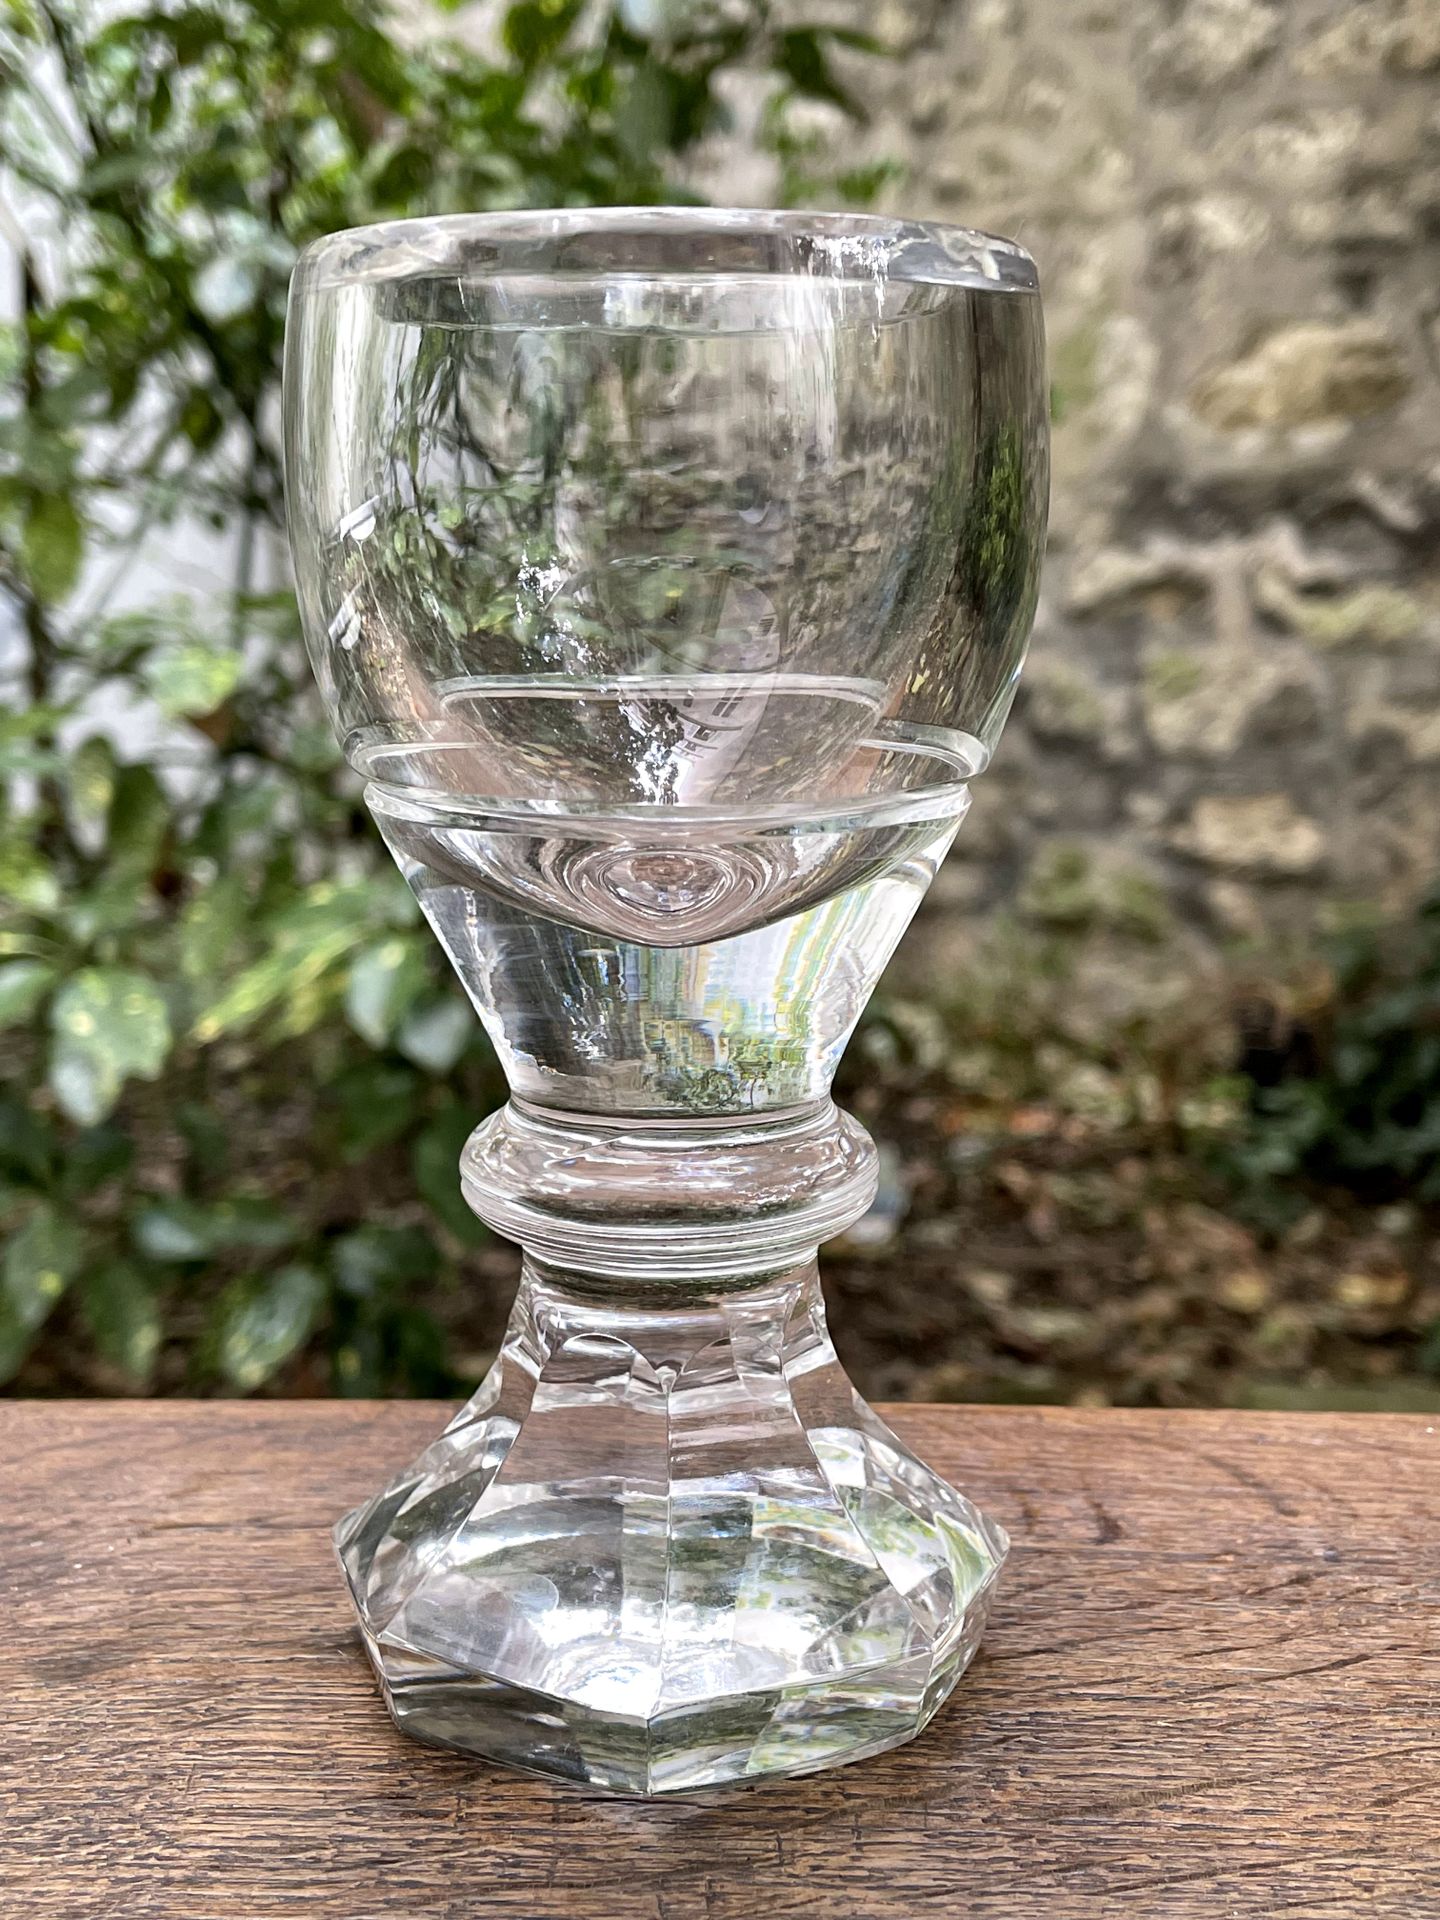 Null 地段包括 :

- 一个玻璃干杯。波西米亚，约1830年。高13,8厘米

- 一个有柄玻璃杯。高8厘米

- 两杯。19世纪。 高9,8厘米。